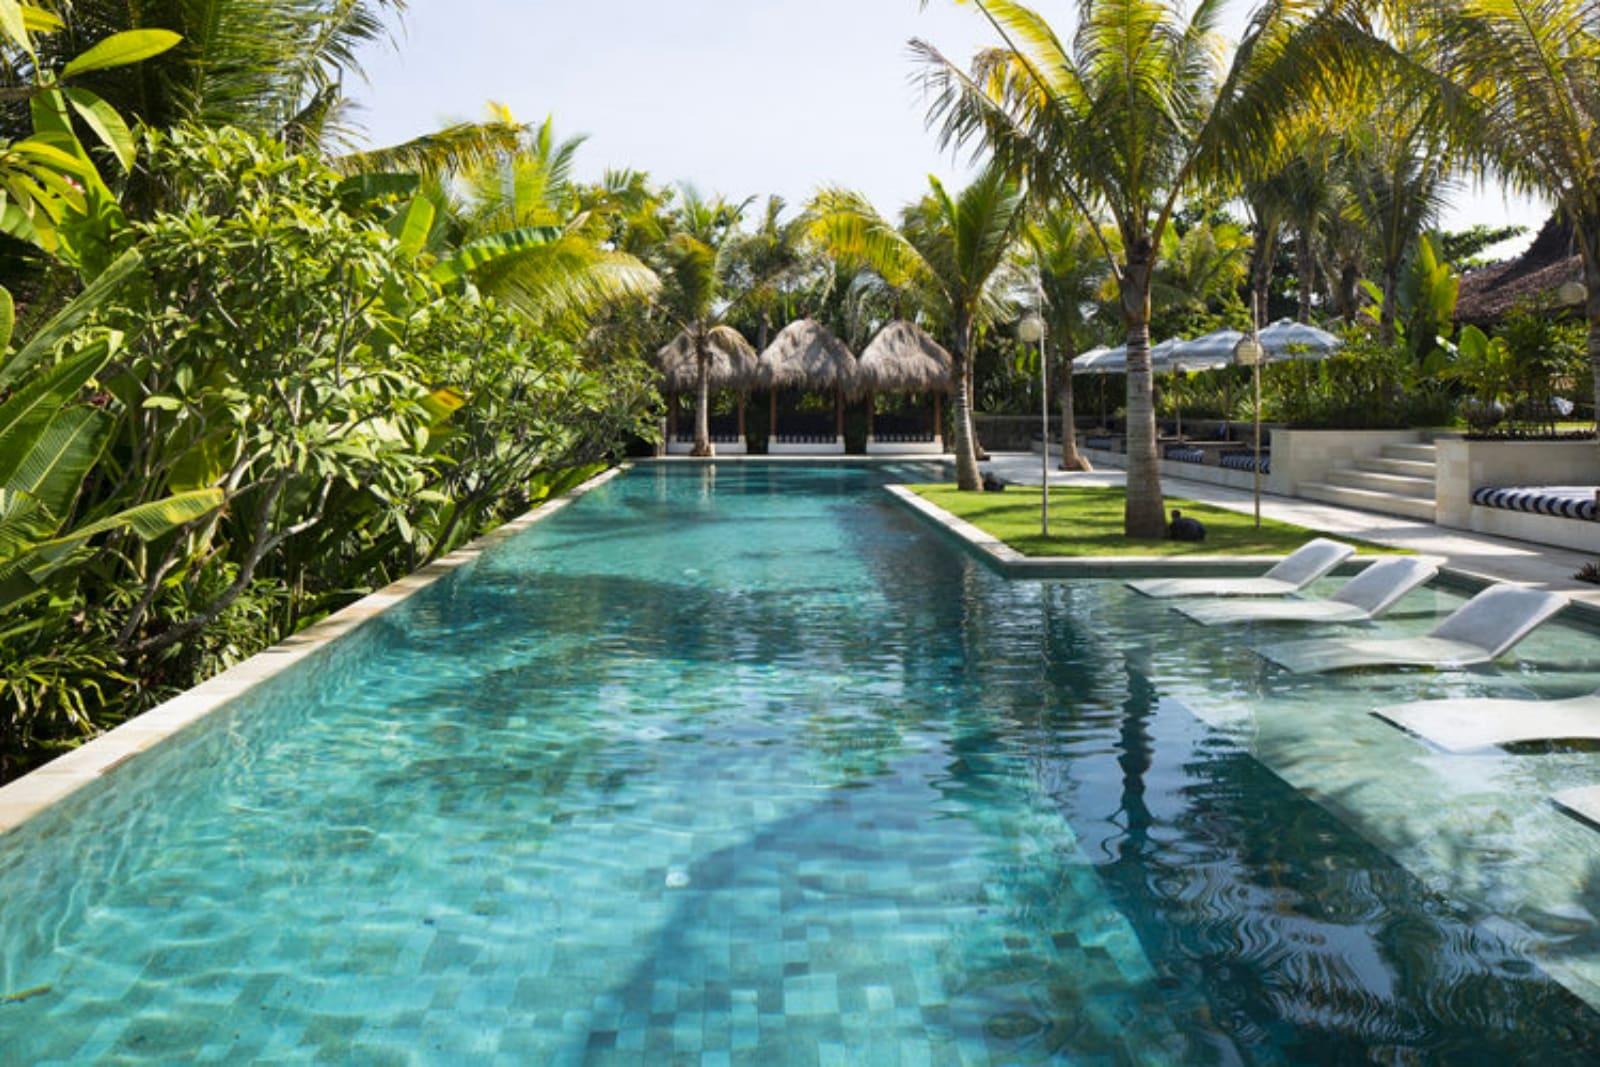 Pool side view of Bali Resort